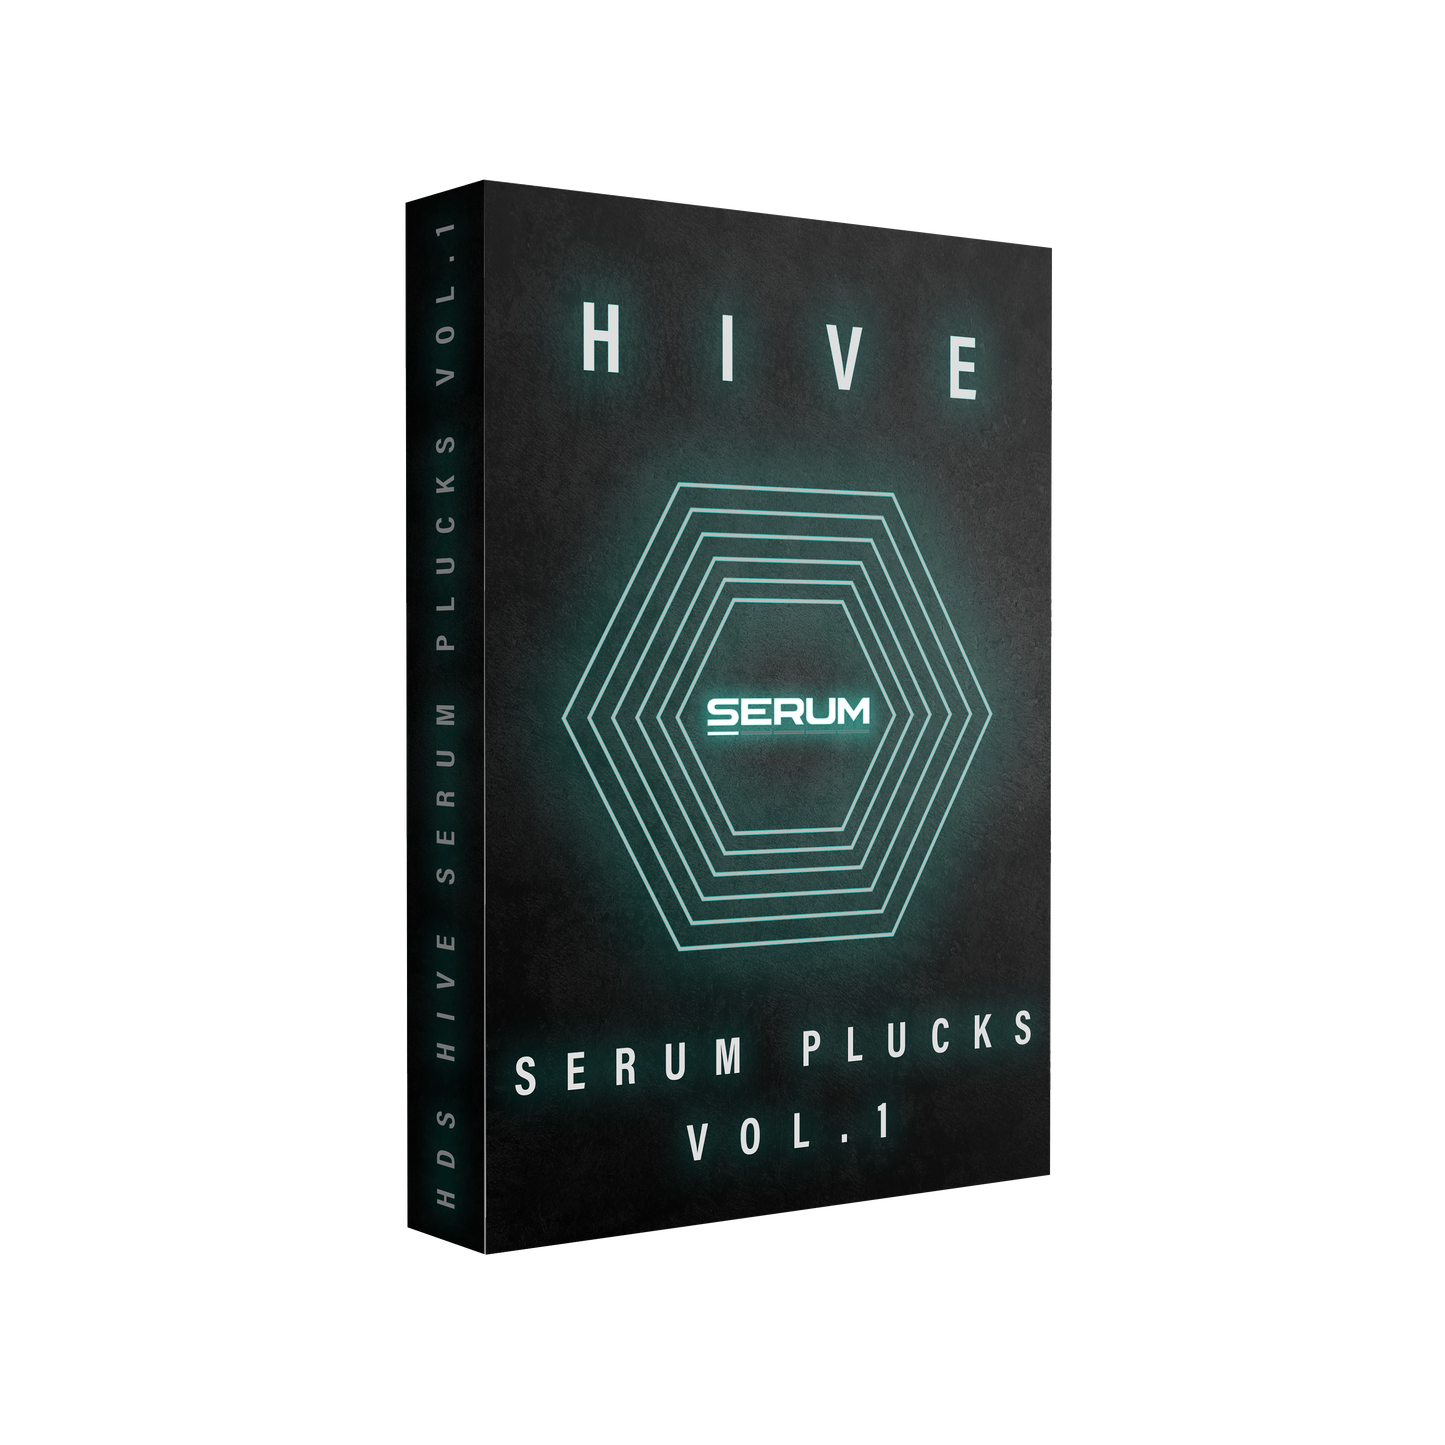 Hive Serum Plucks Vol.1